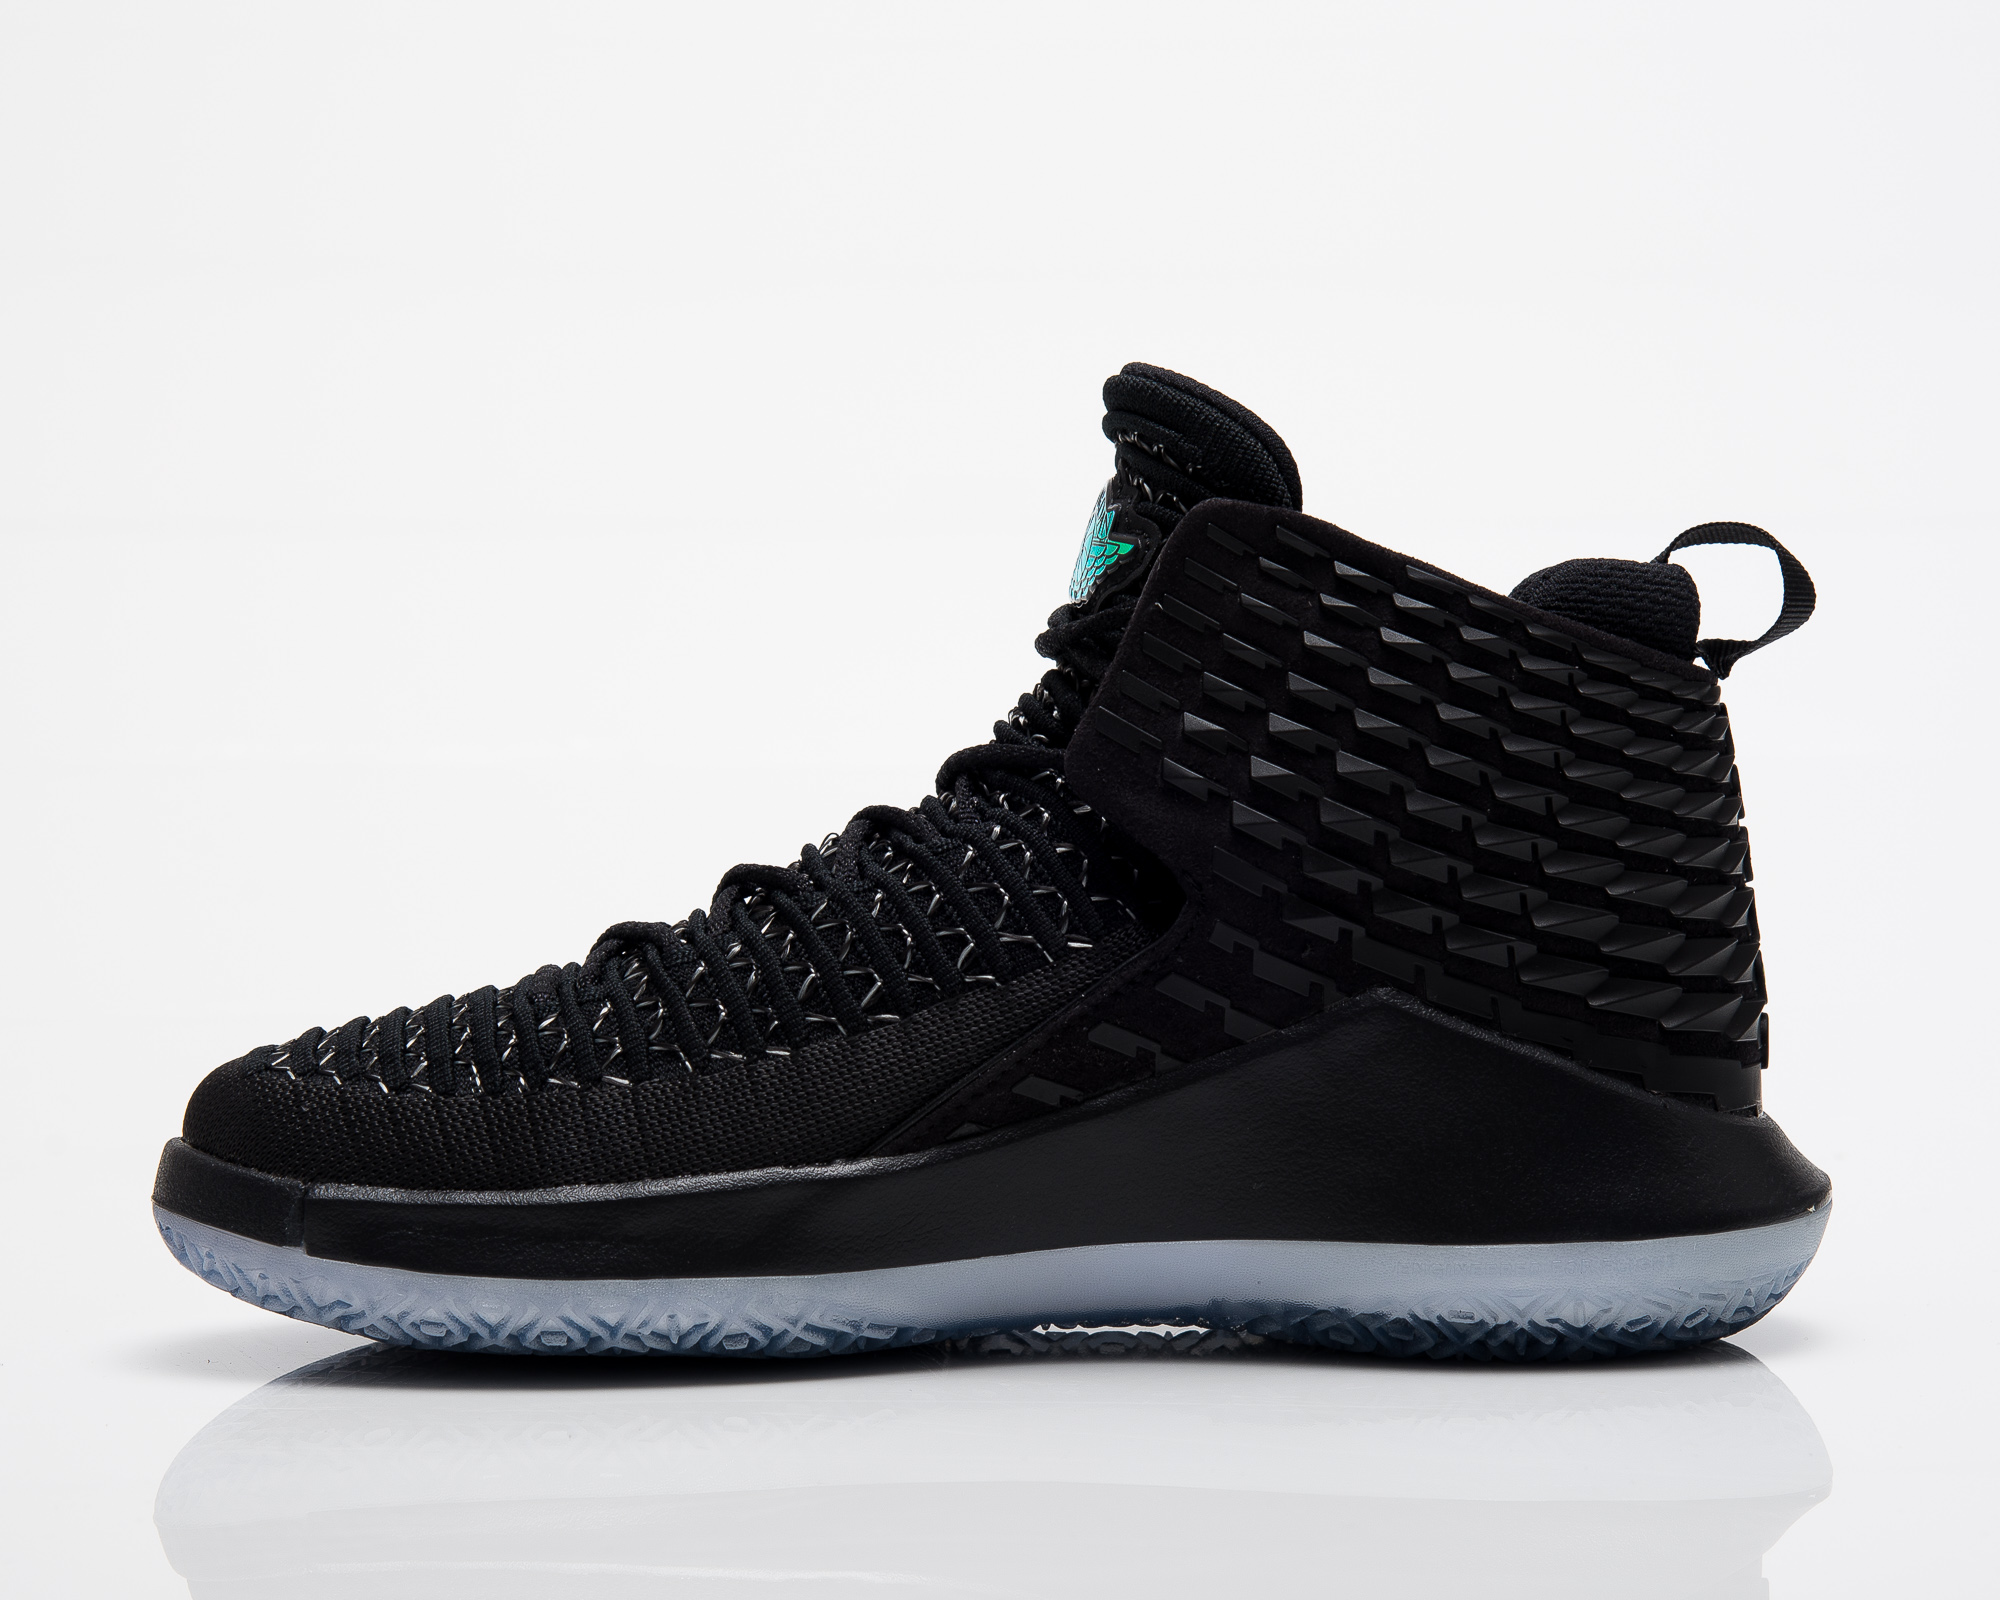 Air Jordan XXXII BG Black Cat Shoes Basketball